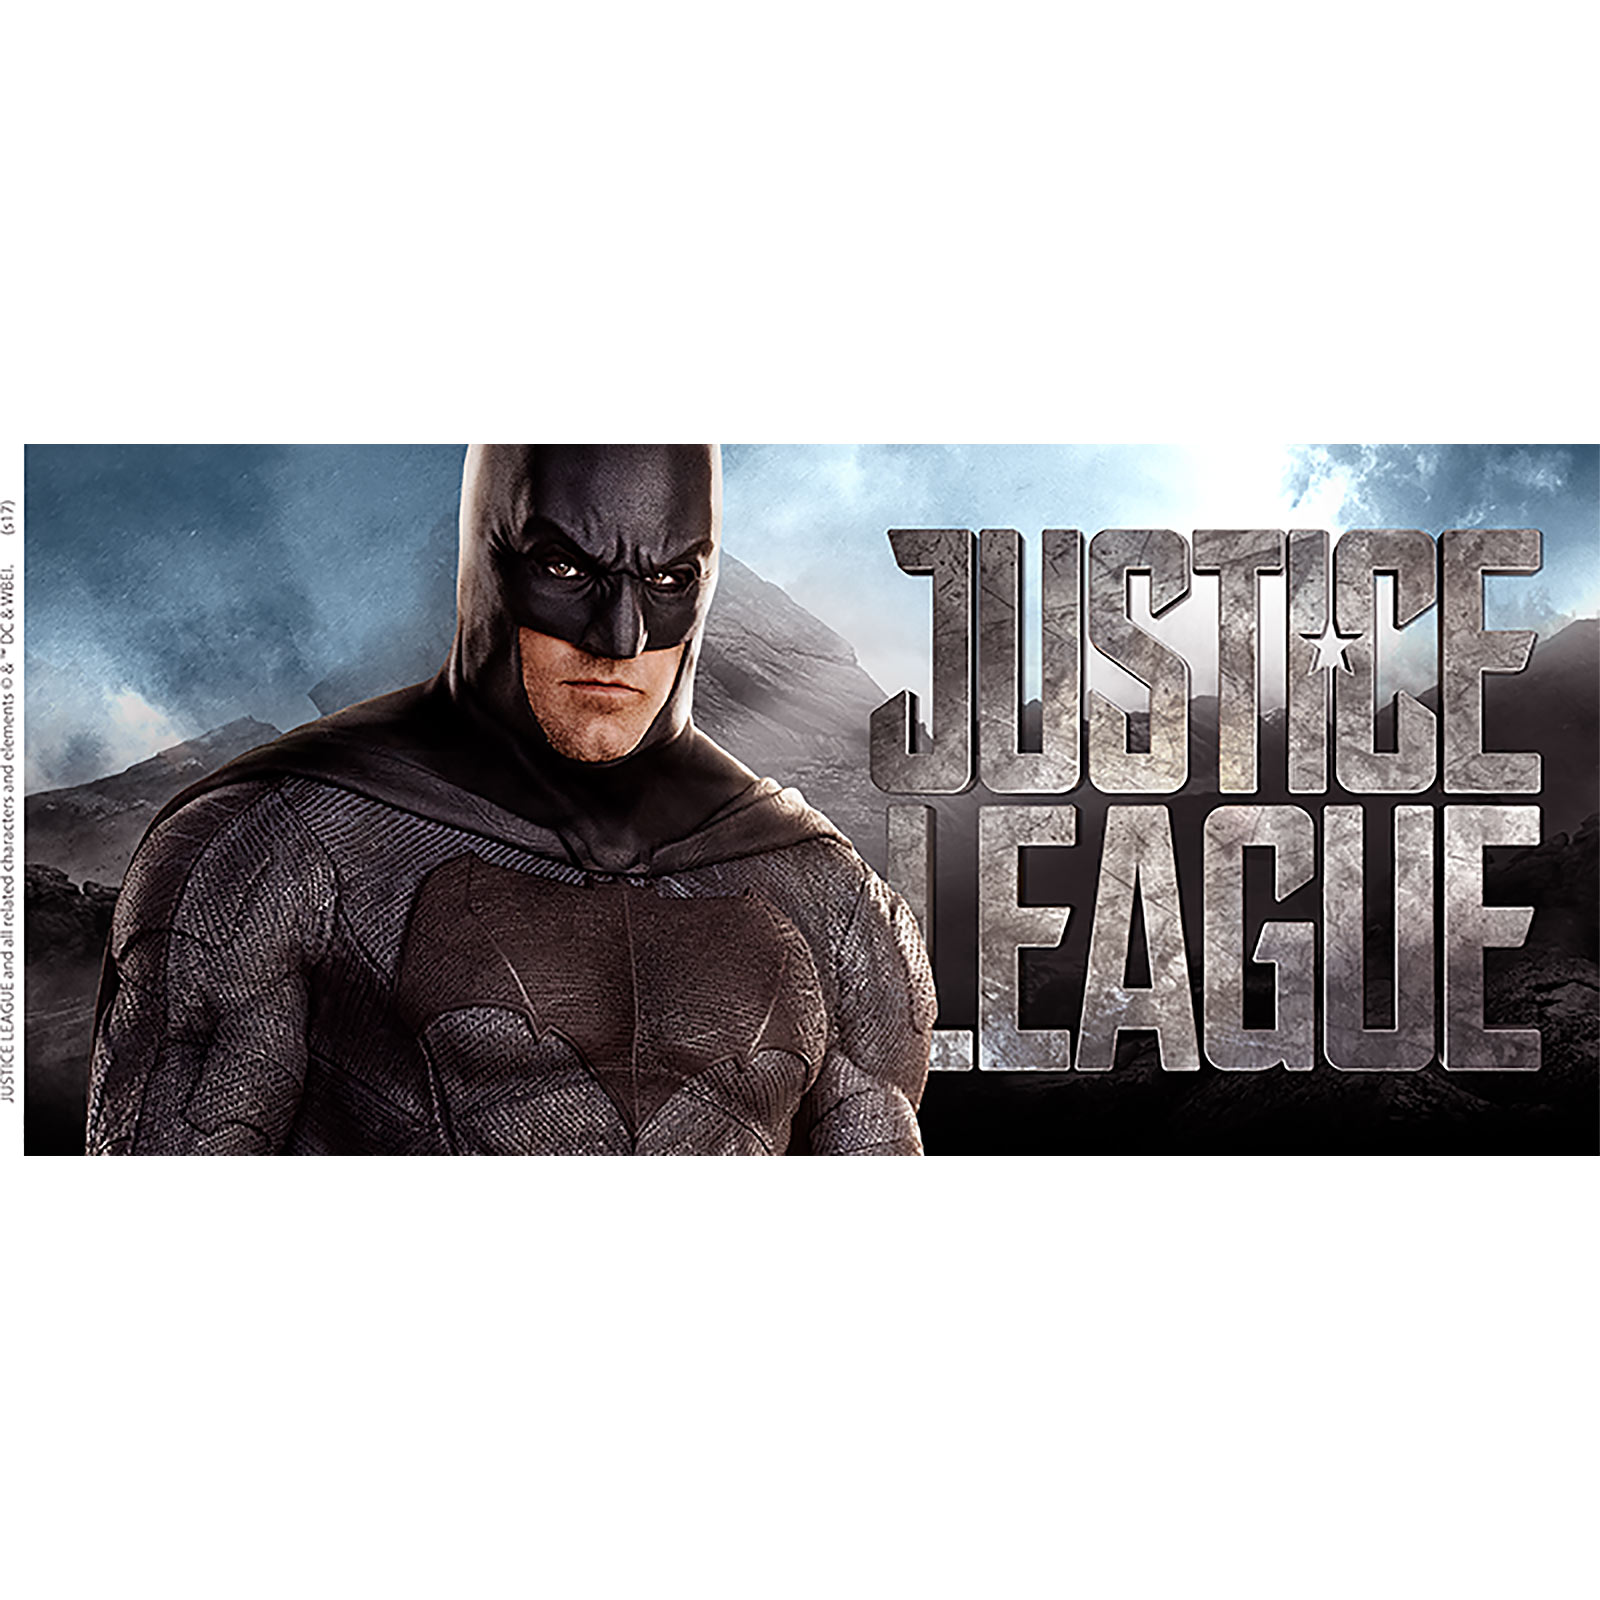 Batman Tasse - Justice League